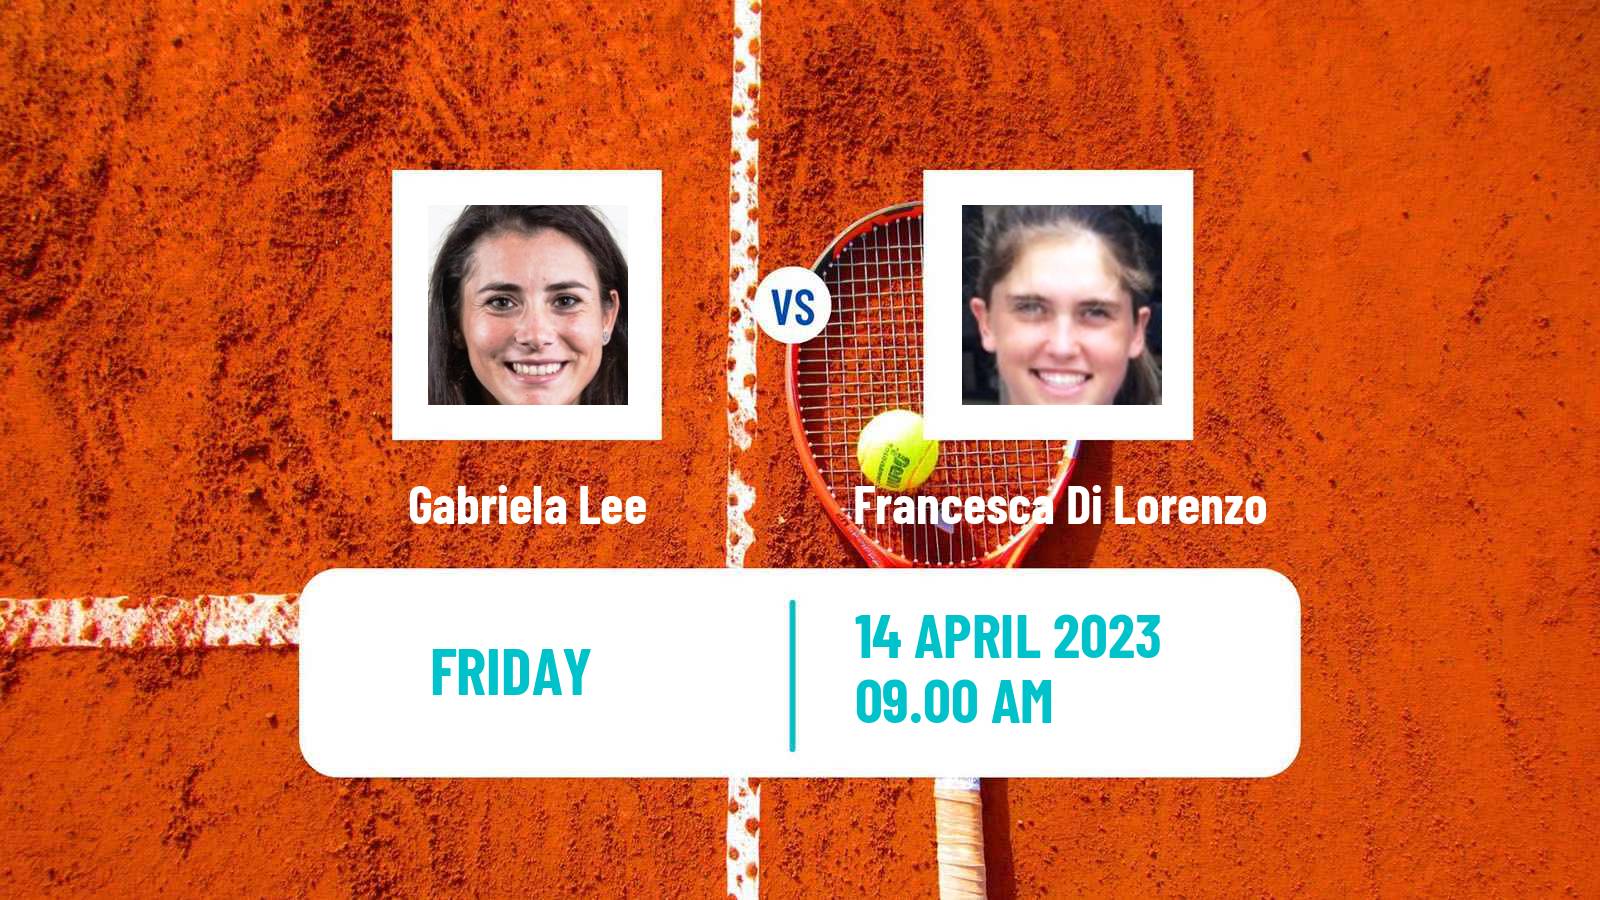 Tennis ITF Tournaments Gabriela Lee - Francesca Di Lorenzo